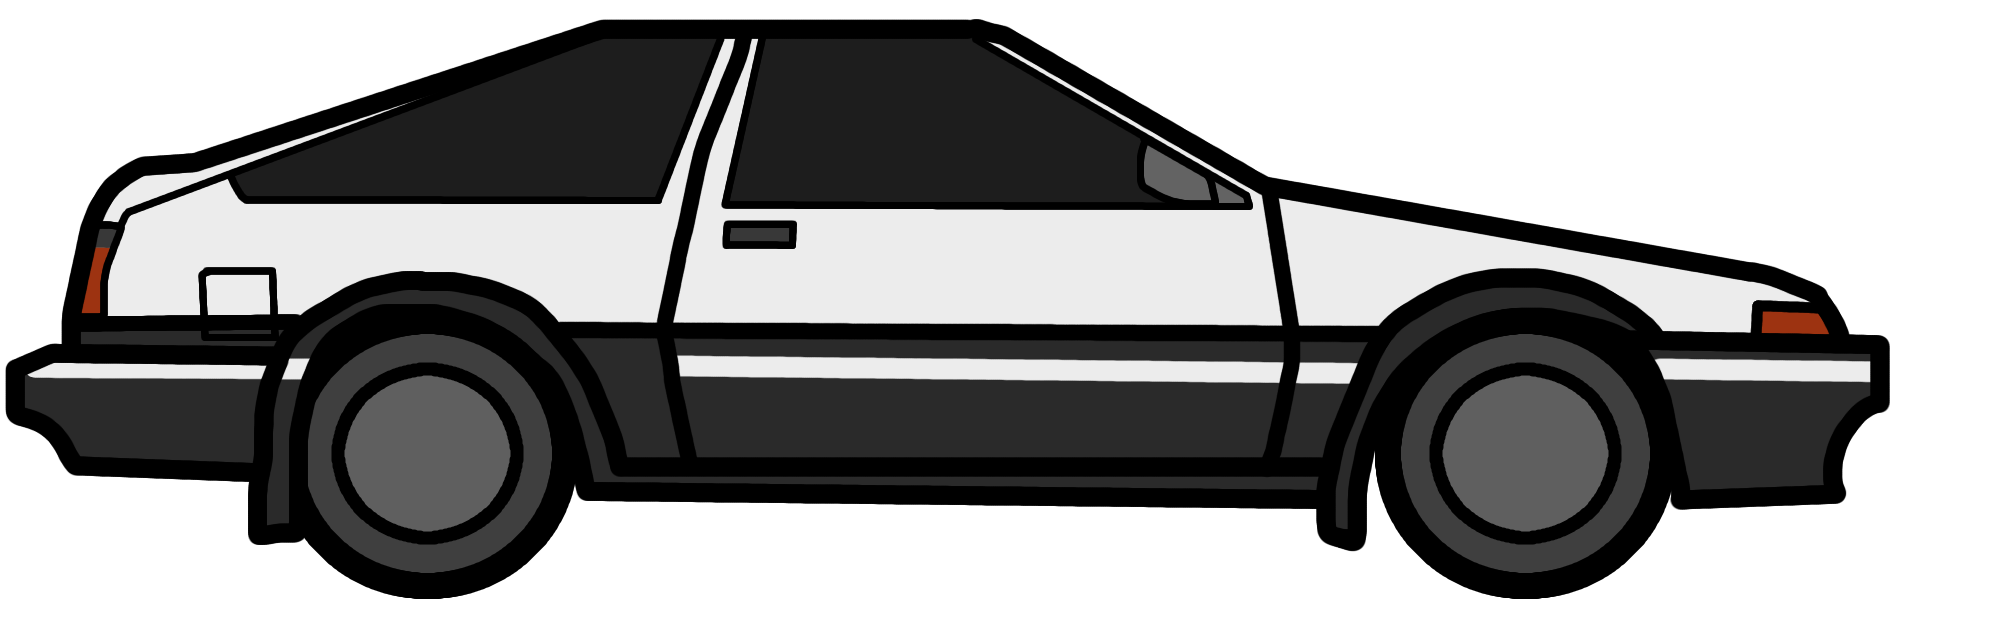 Toyota AE86 Transparent File